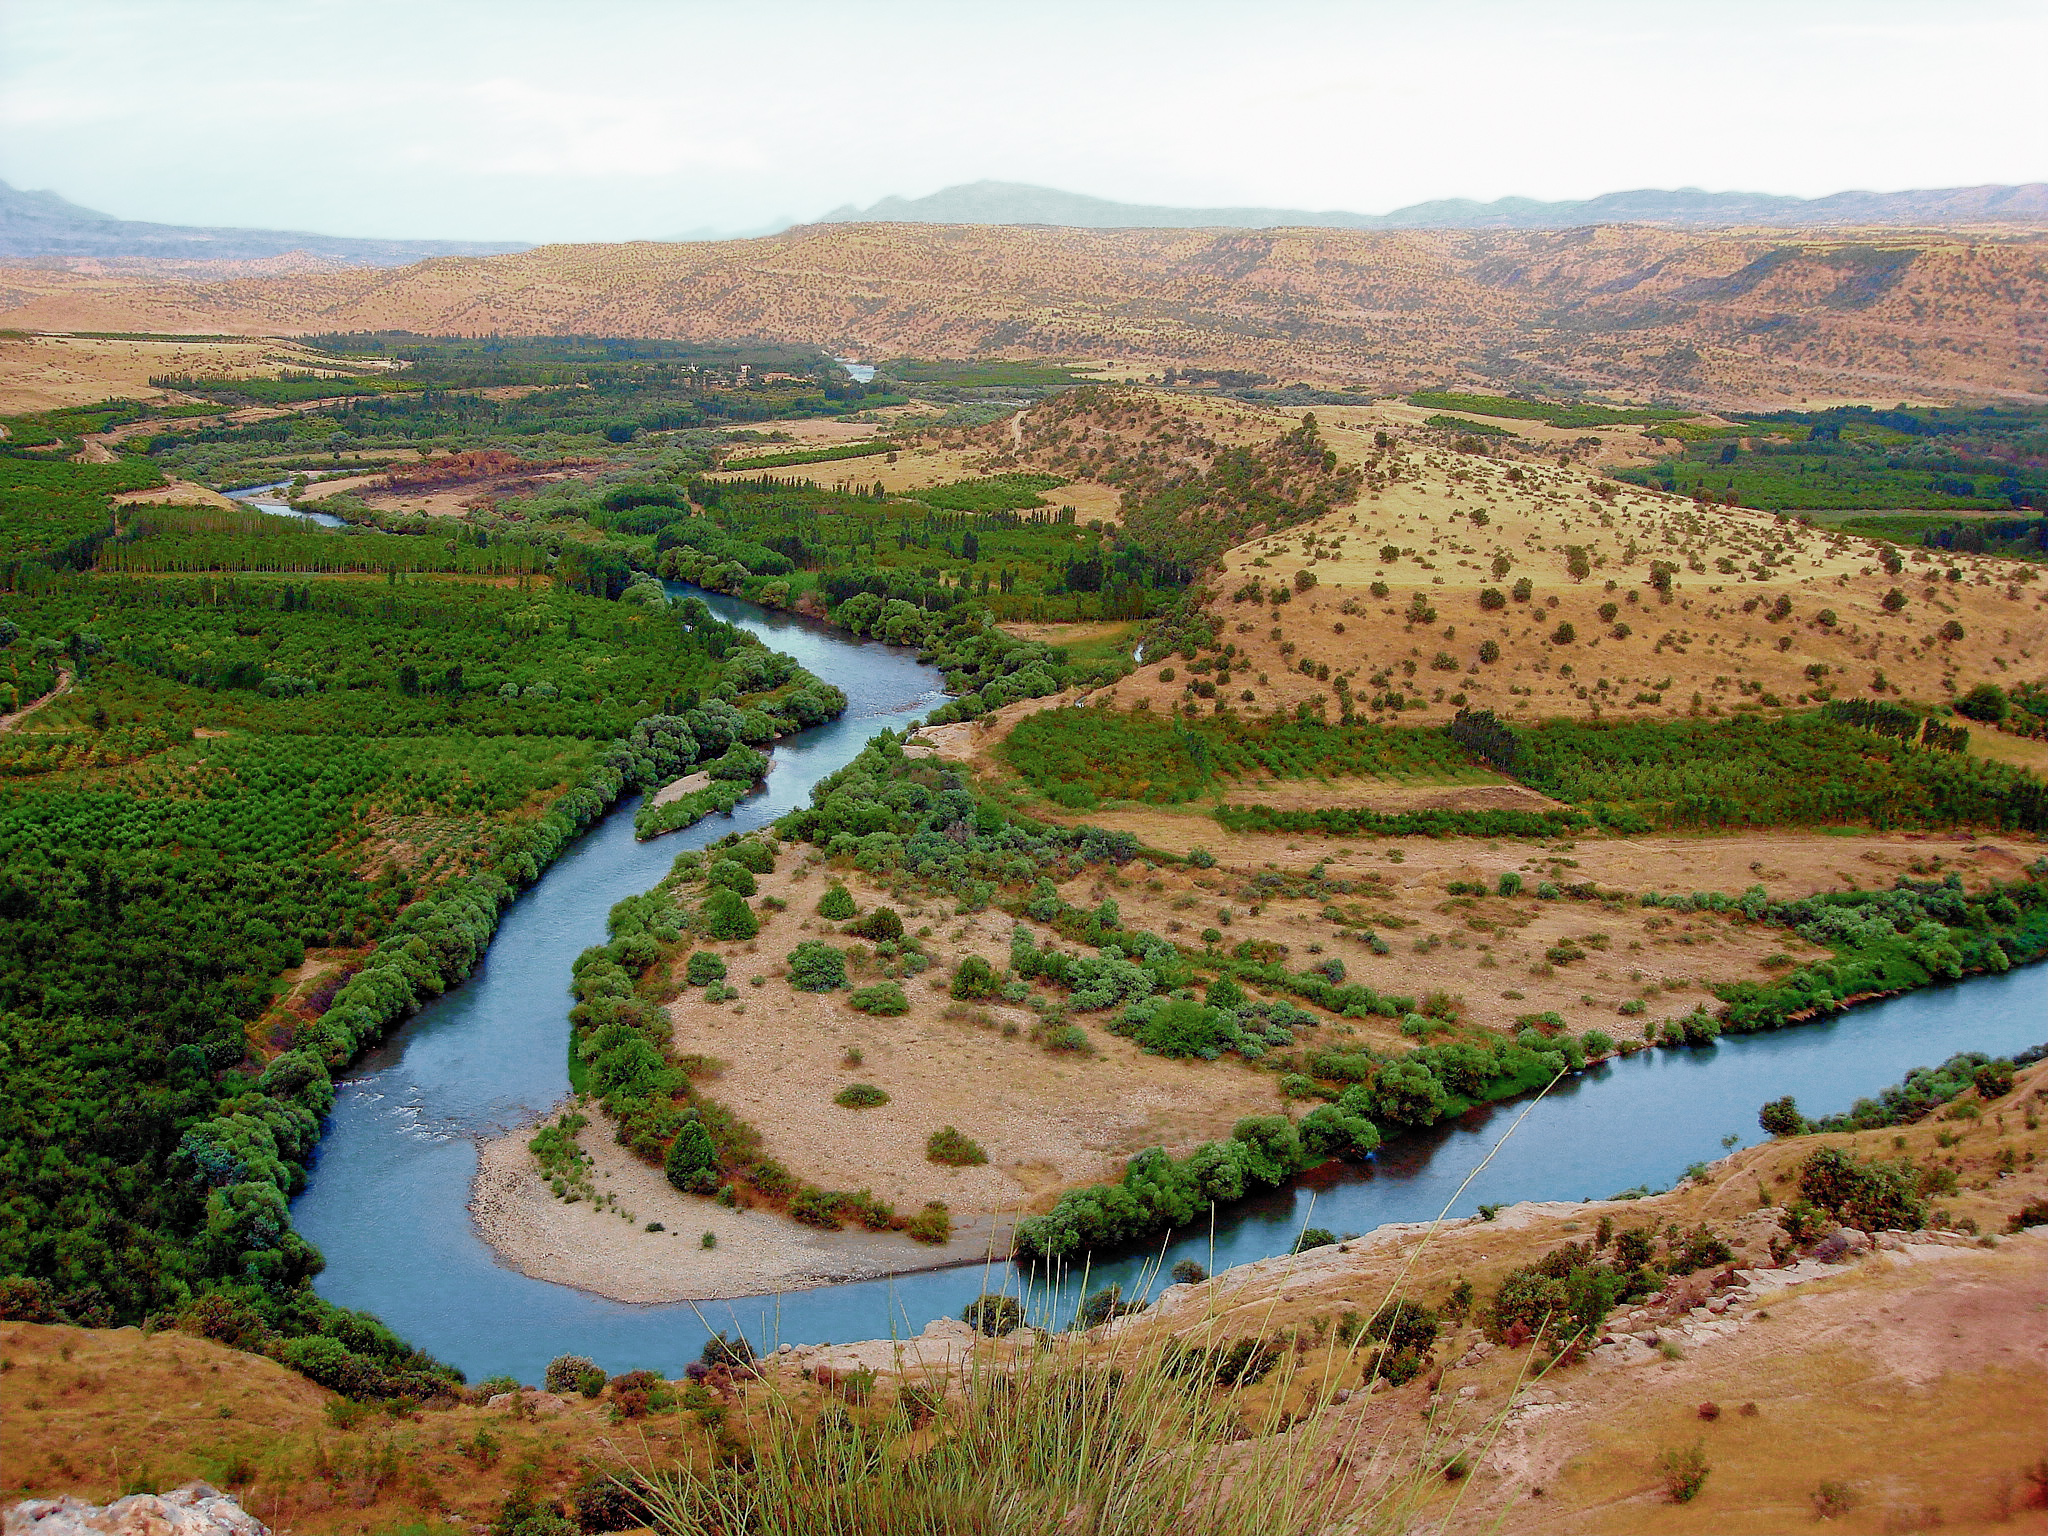 File:Greater Zab River near Erbil Iraqi Kurdistan.jpg - Wikipedia, the ...